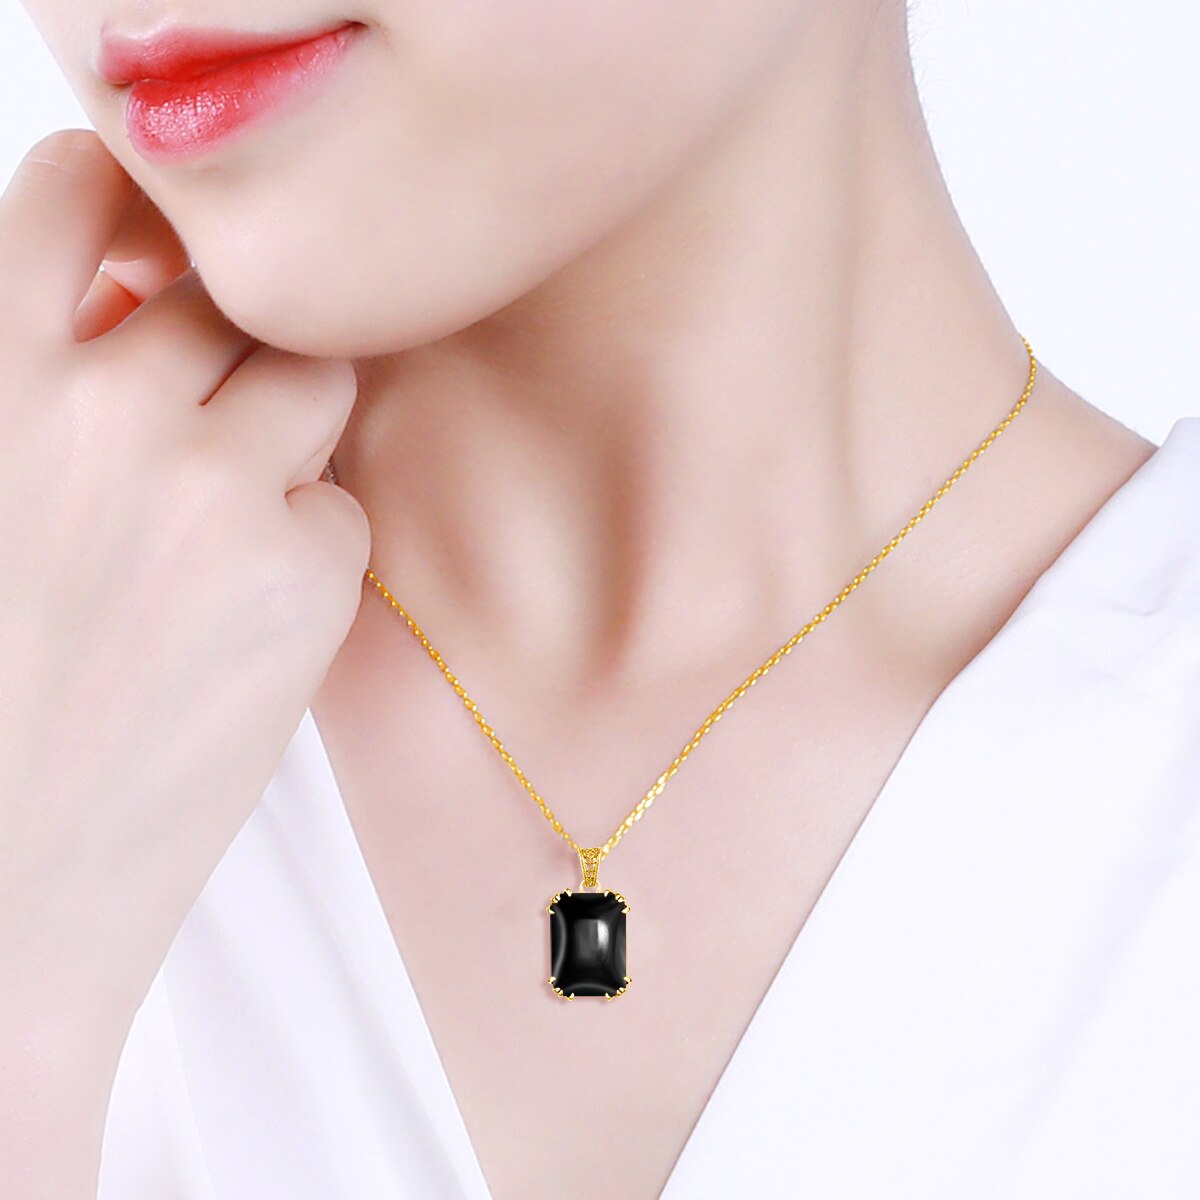 SILVERCHAKRA 585 14k Gold Color Necklaces Black Onyx Gemstones Pendant Necklace For Women 925 Sterling Silver Fine Jewelry